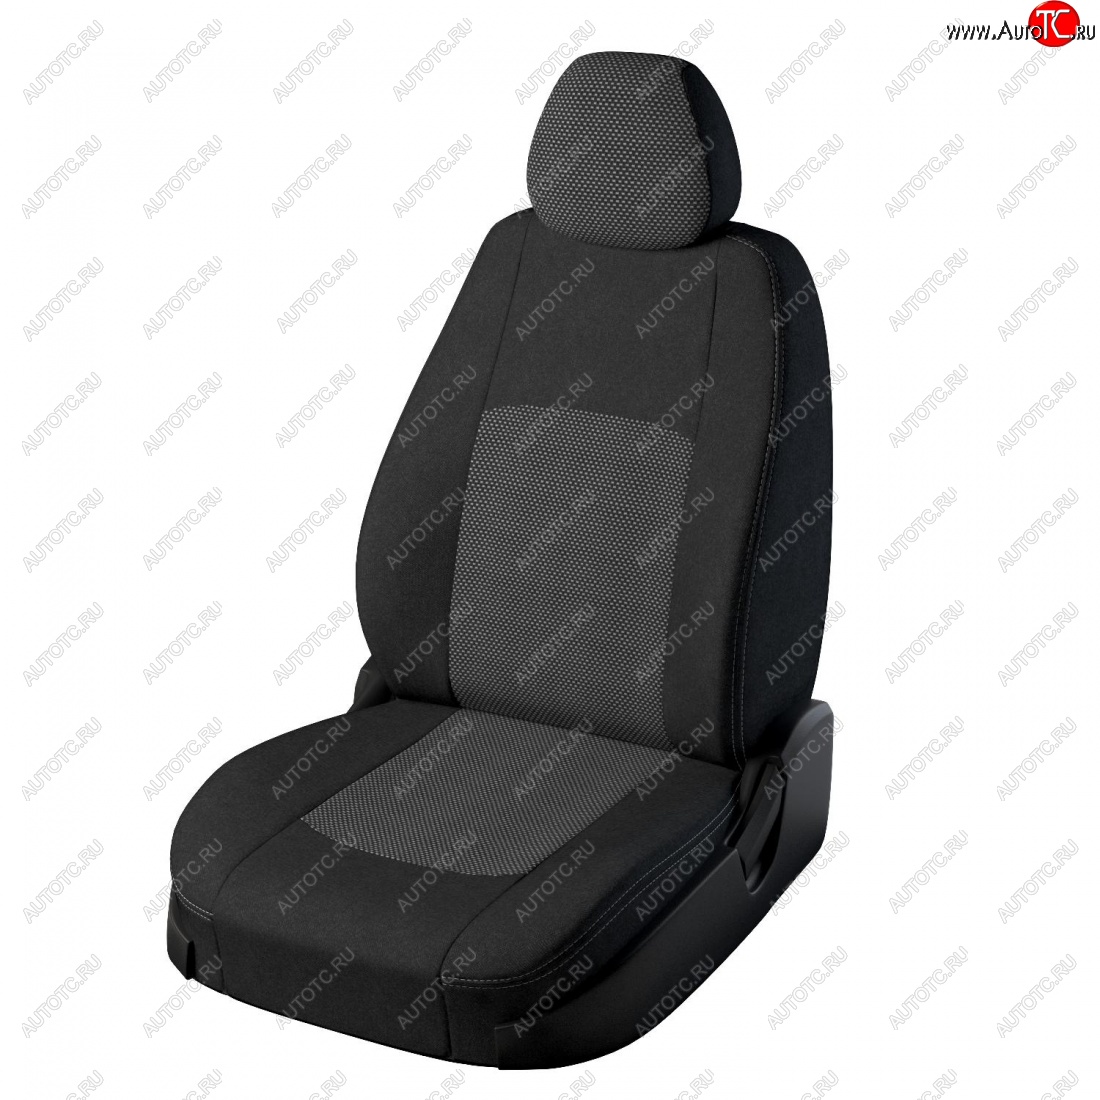 7 399 р. Чехлы для сидений Lord Autofashion Турин (экокожа, жаккард) Volkswagen Passat B5.5 универсал рестайлинг (2000-2005) (Чёрный, вставка жаккард Тома серый)